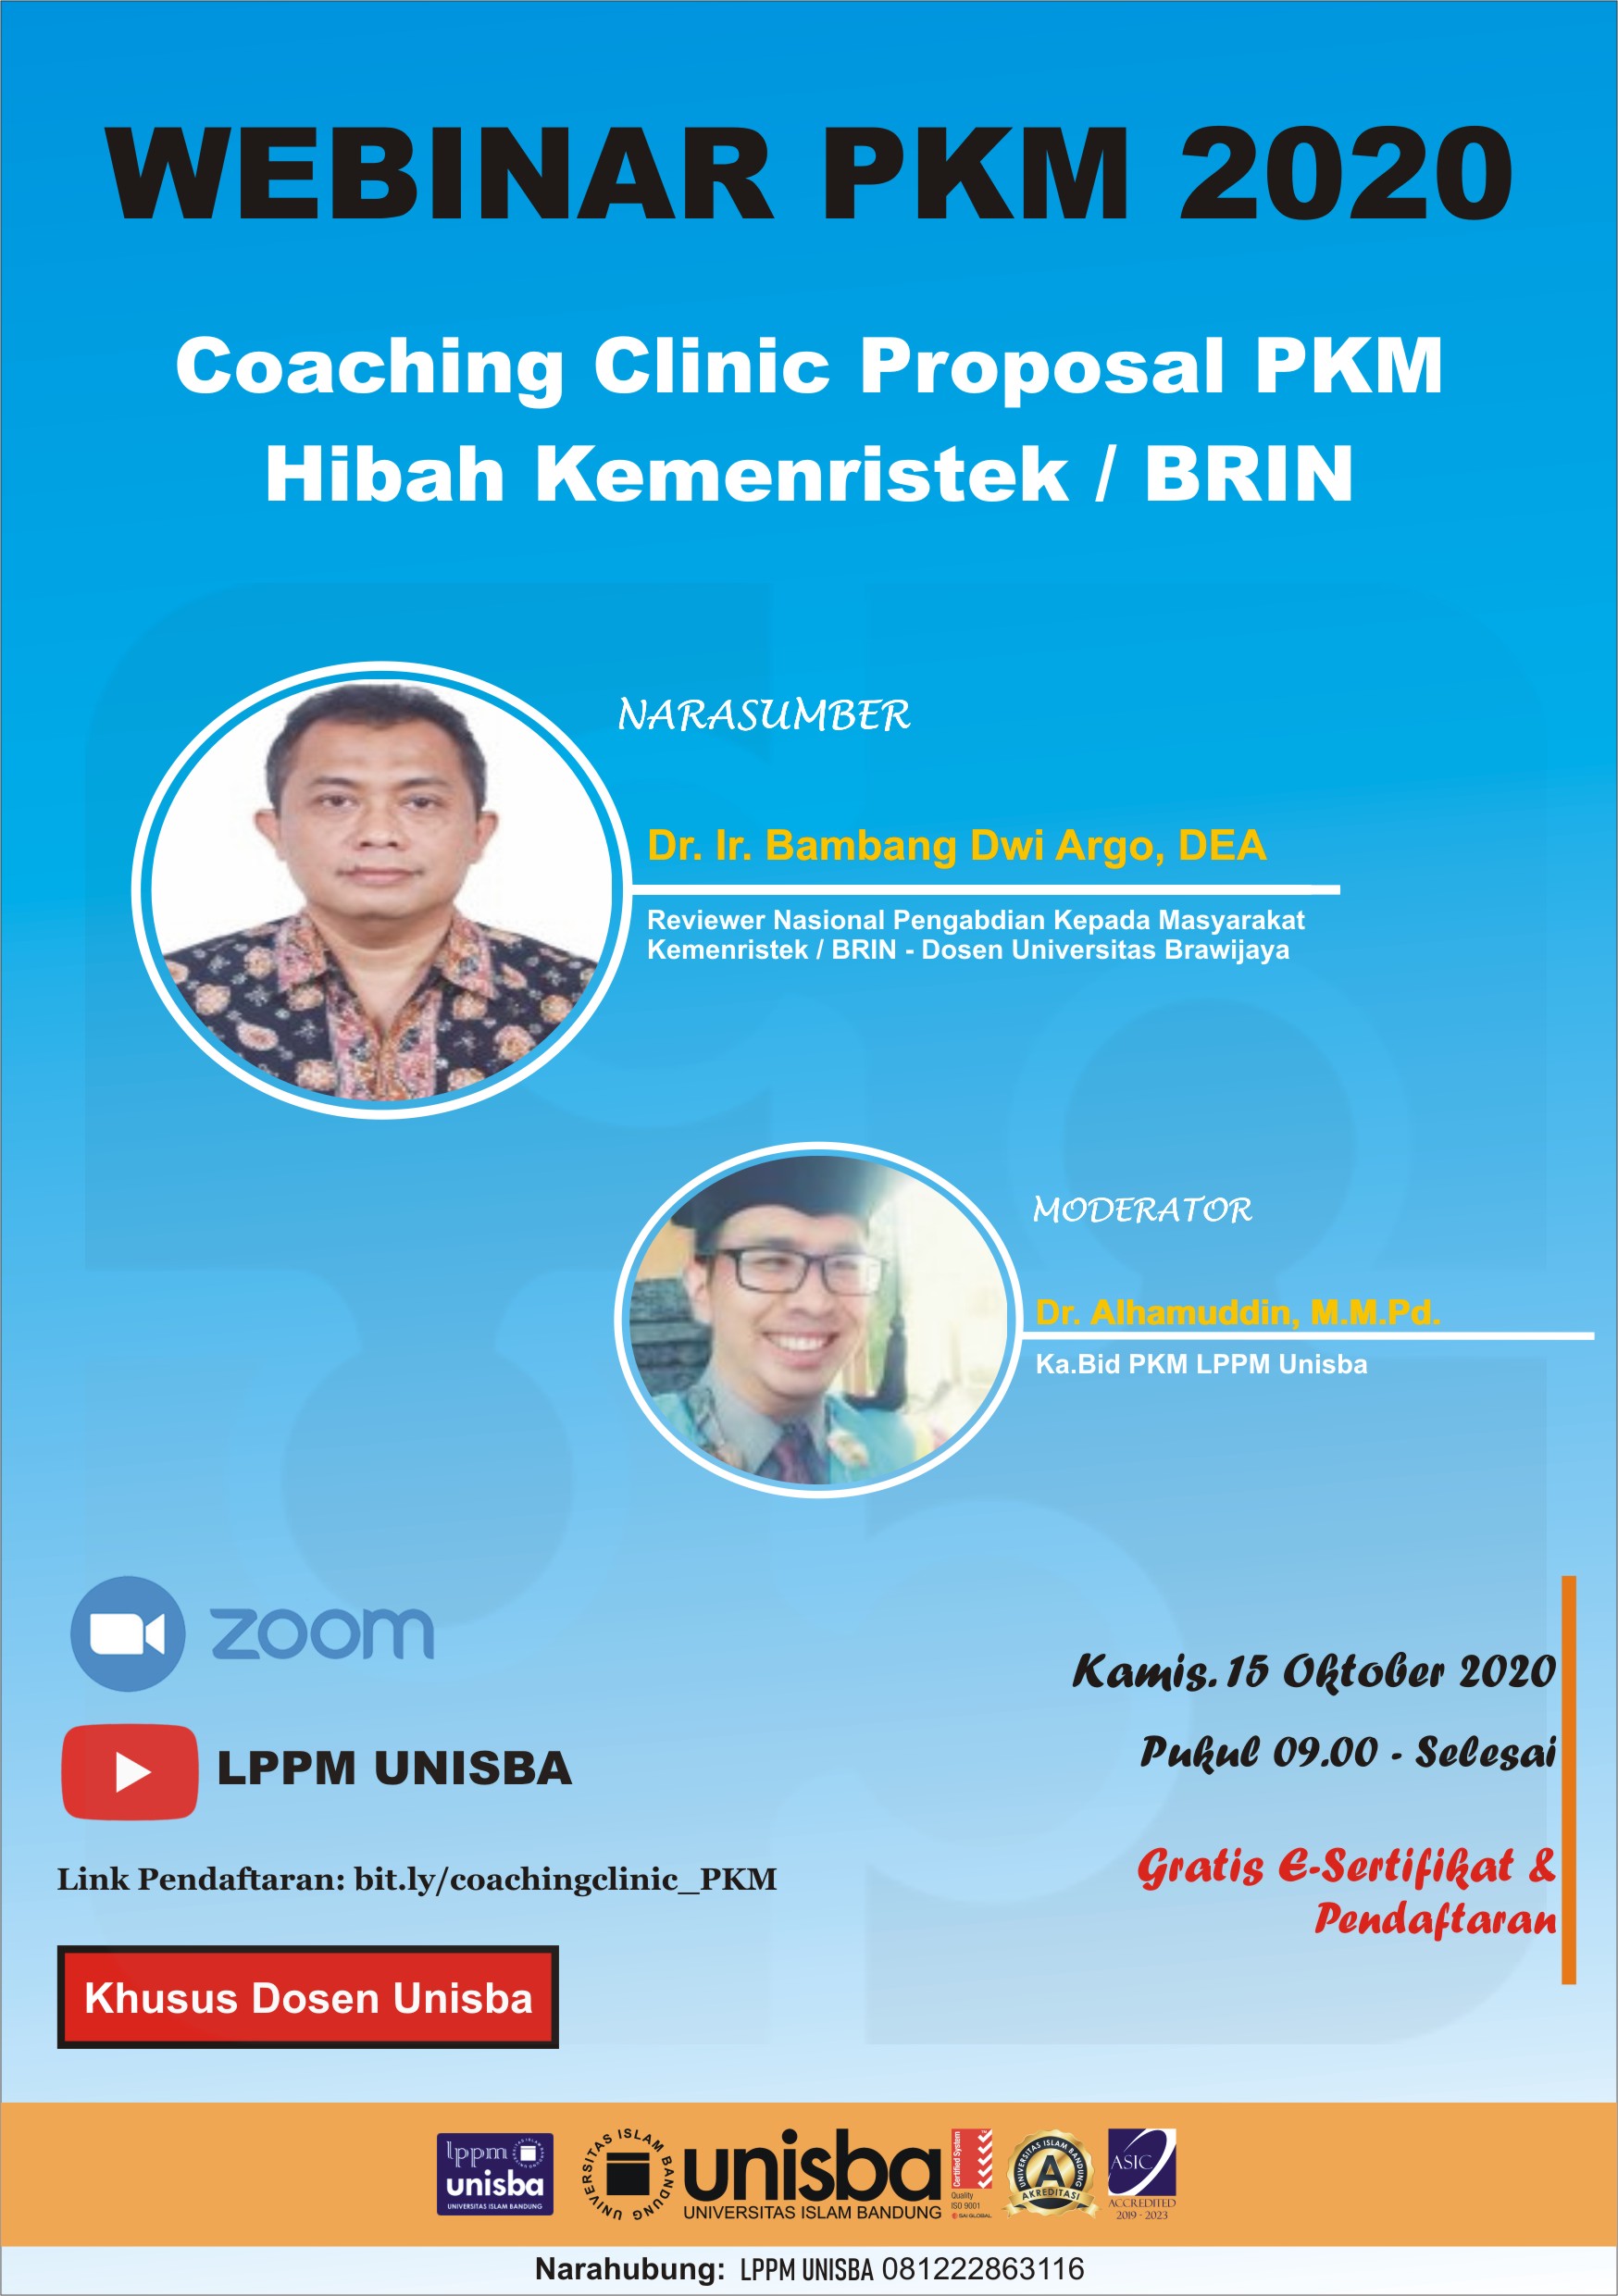 Coaching Clinic Proposal PKM HIbah Kemenristek/BRIN